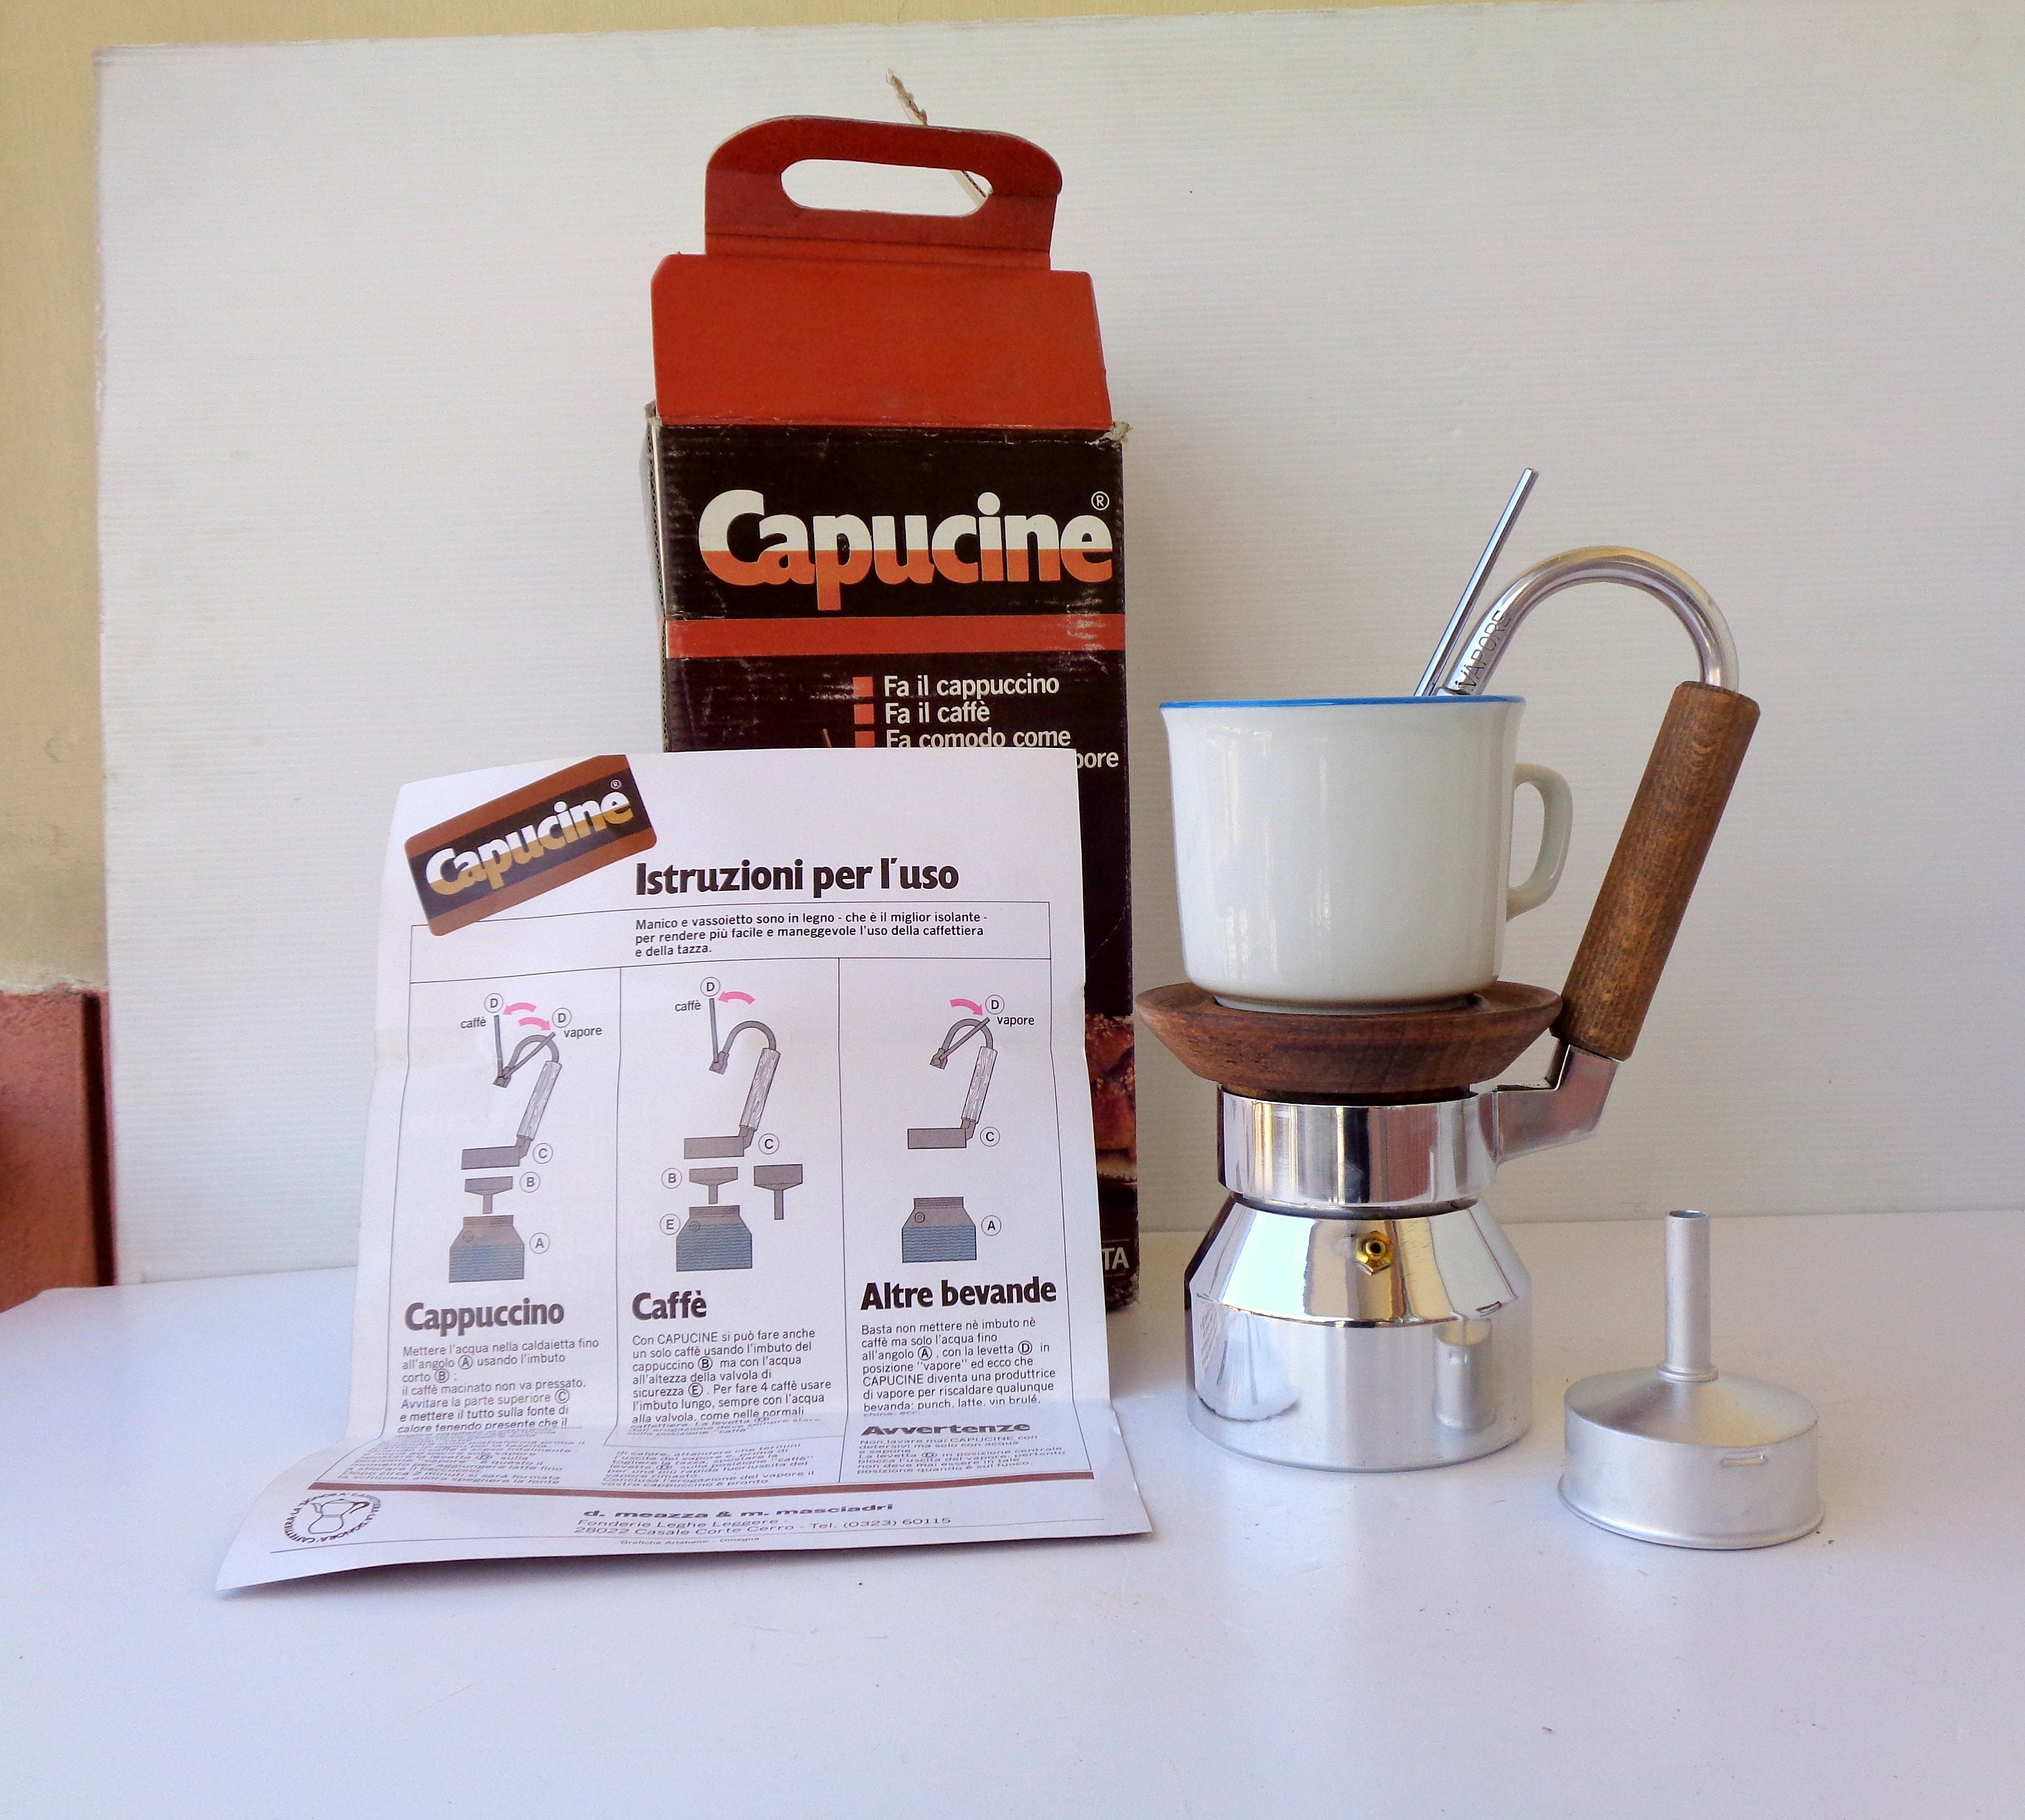 Espresso Cappuccino and Coffee Machine, Never Used, With Original